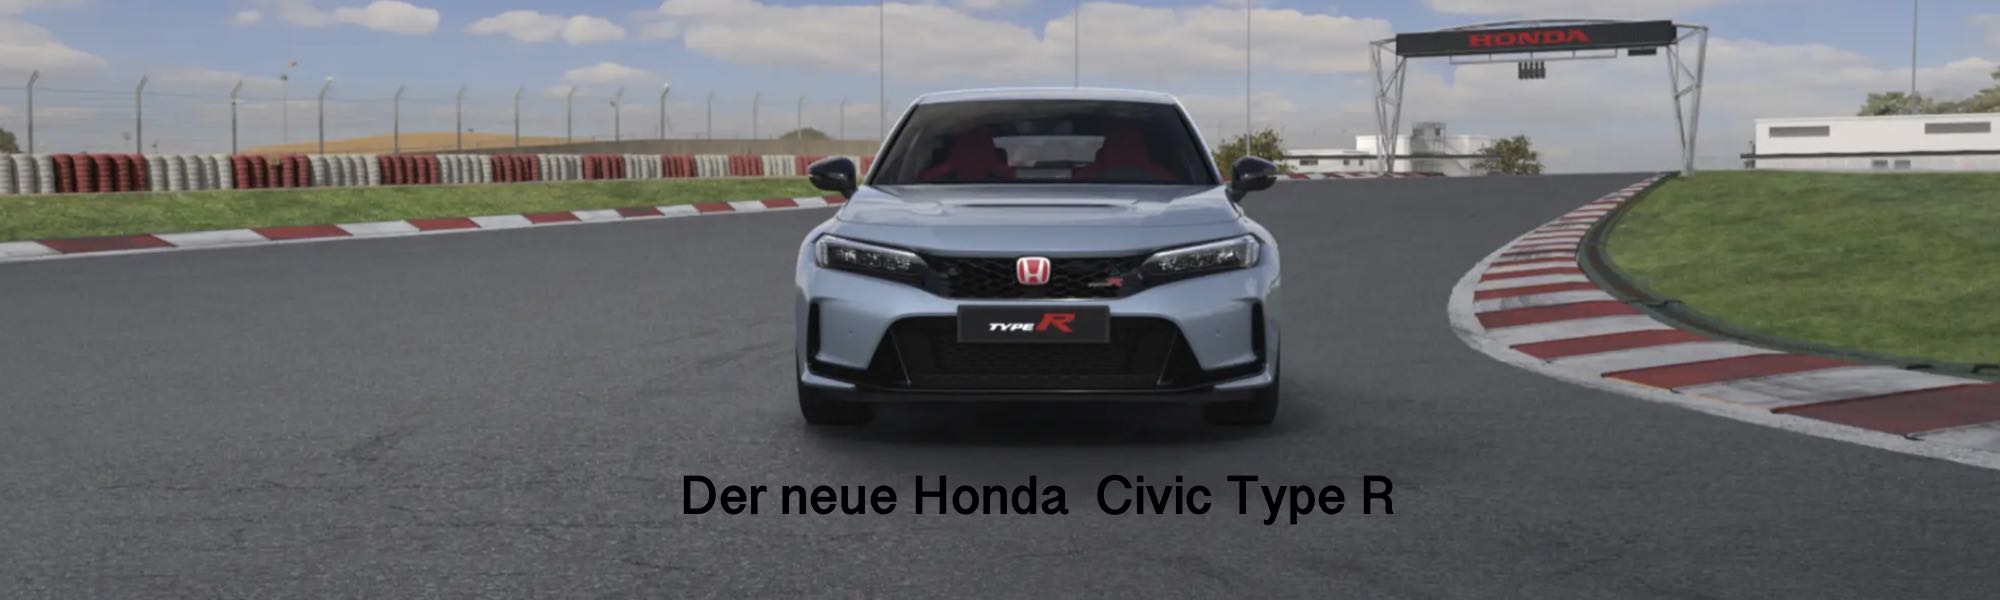 Der neue Honda Civic Type R